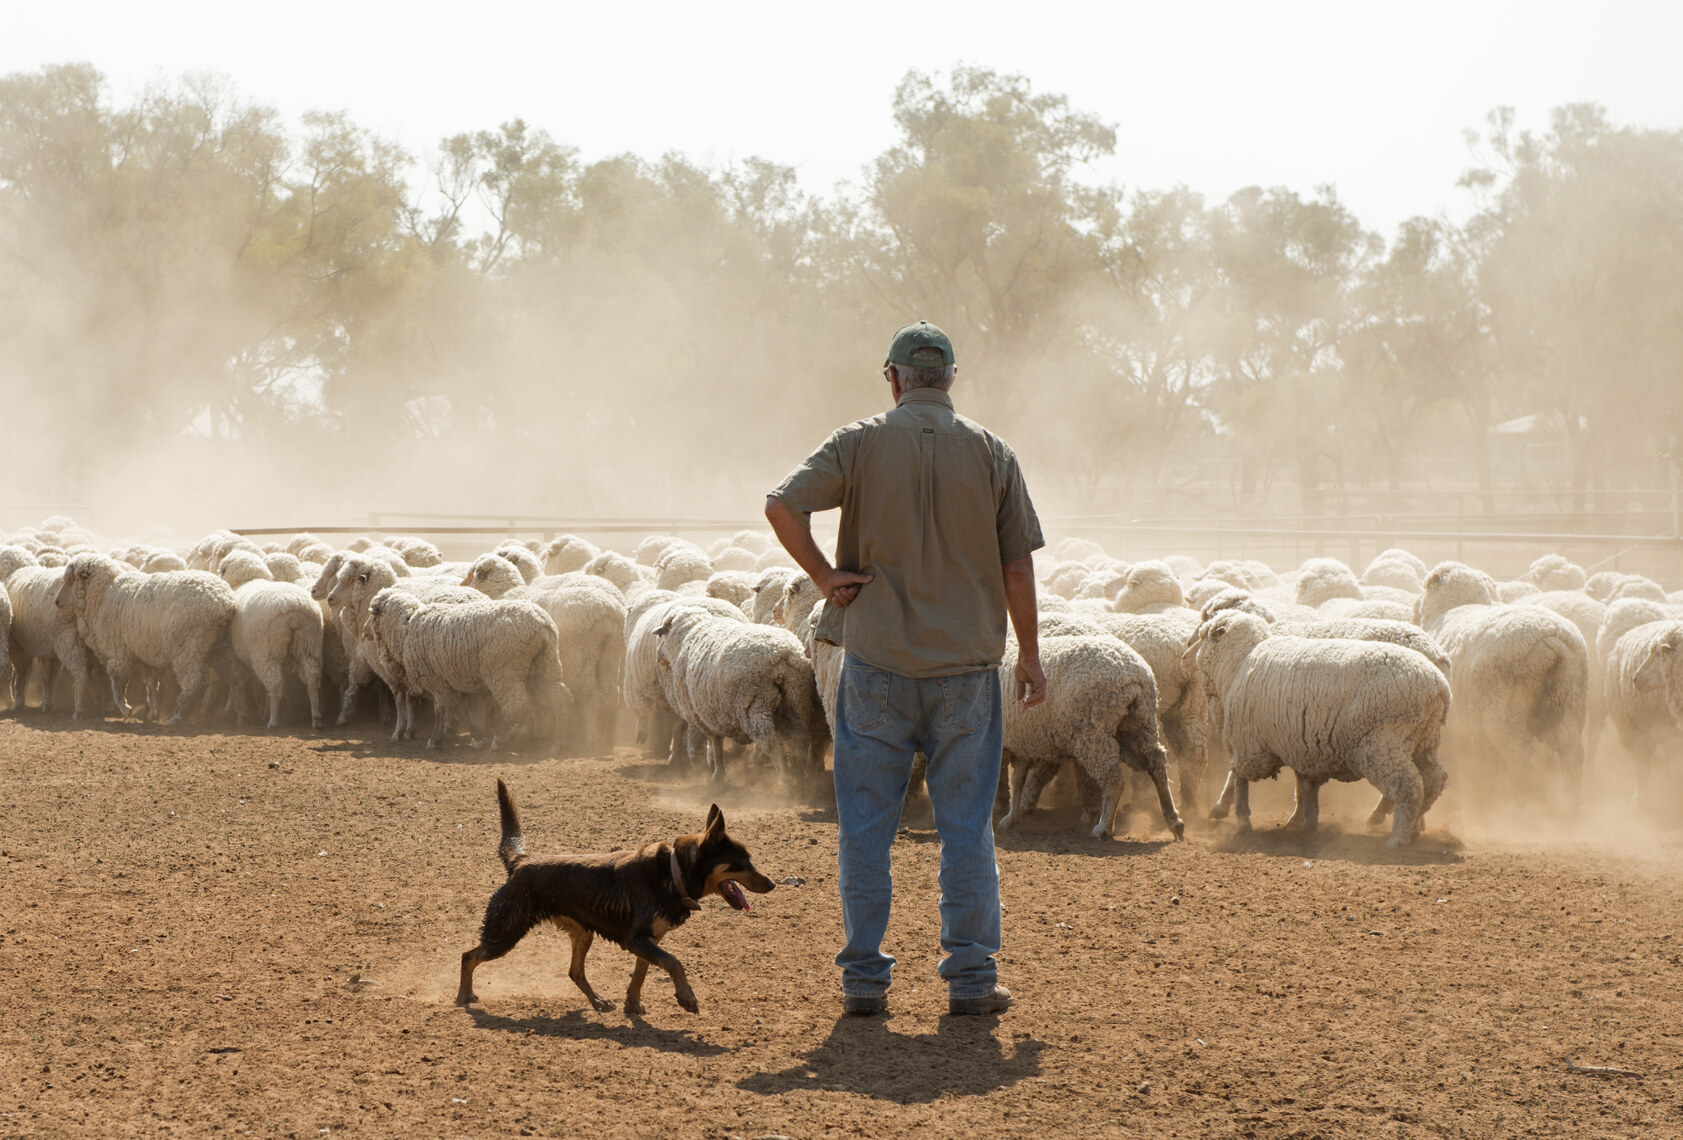 Sheep Sales Australia